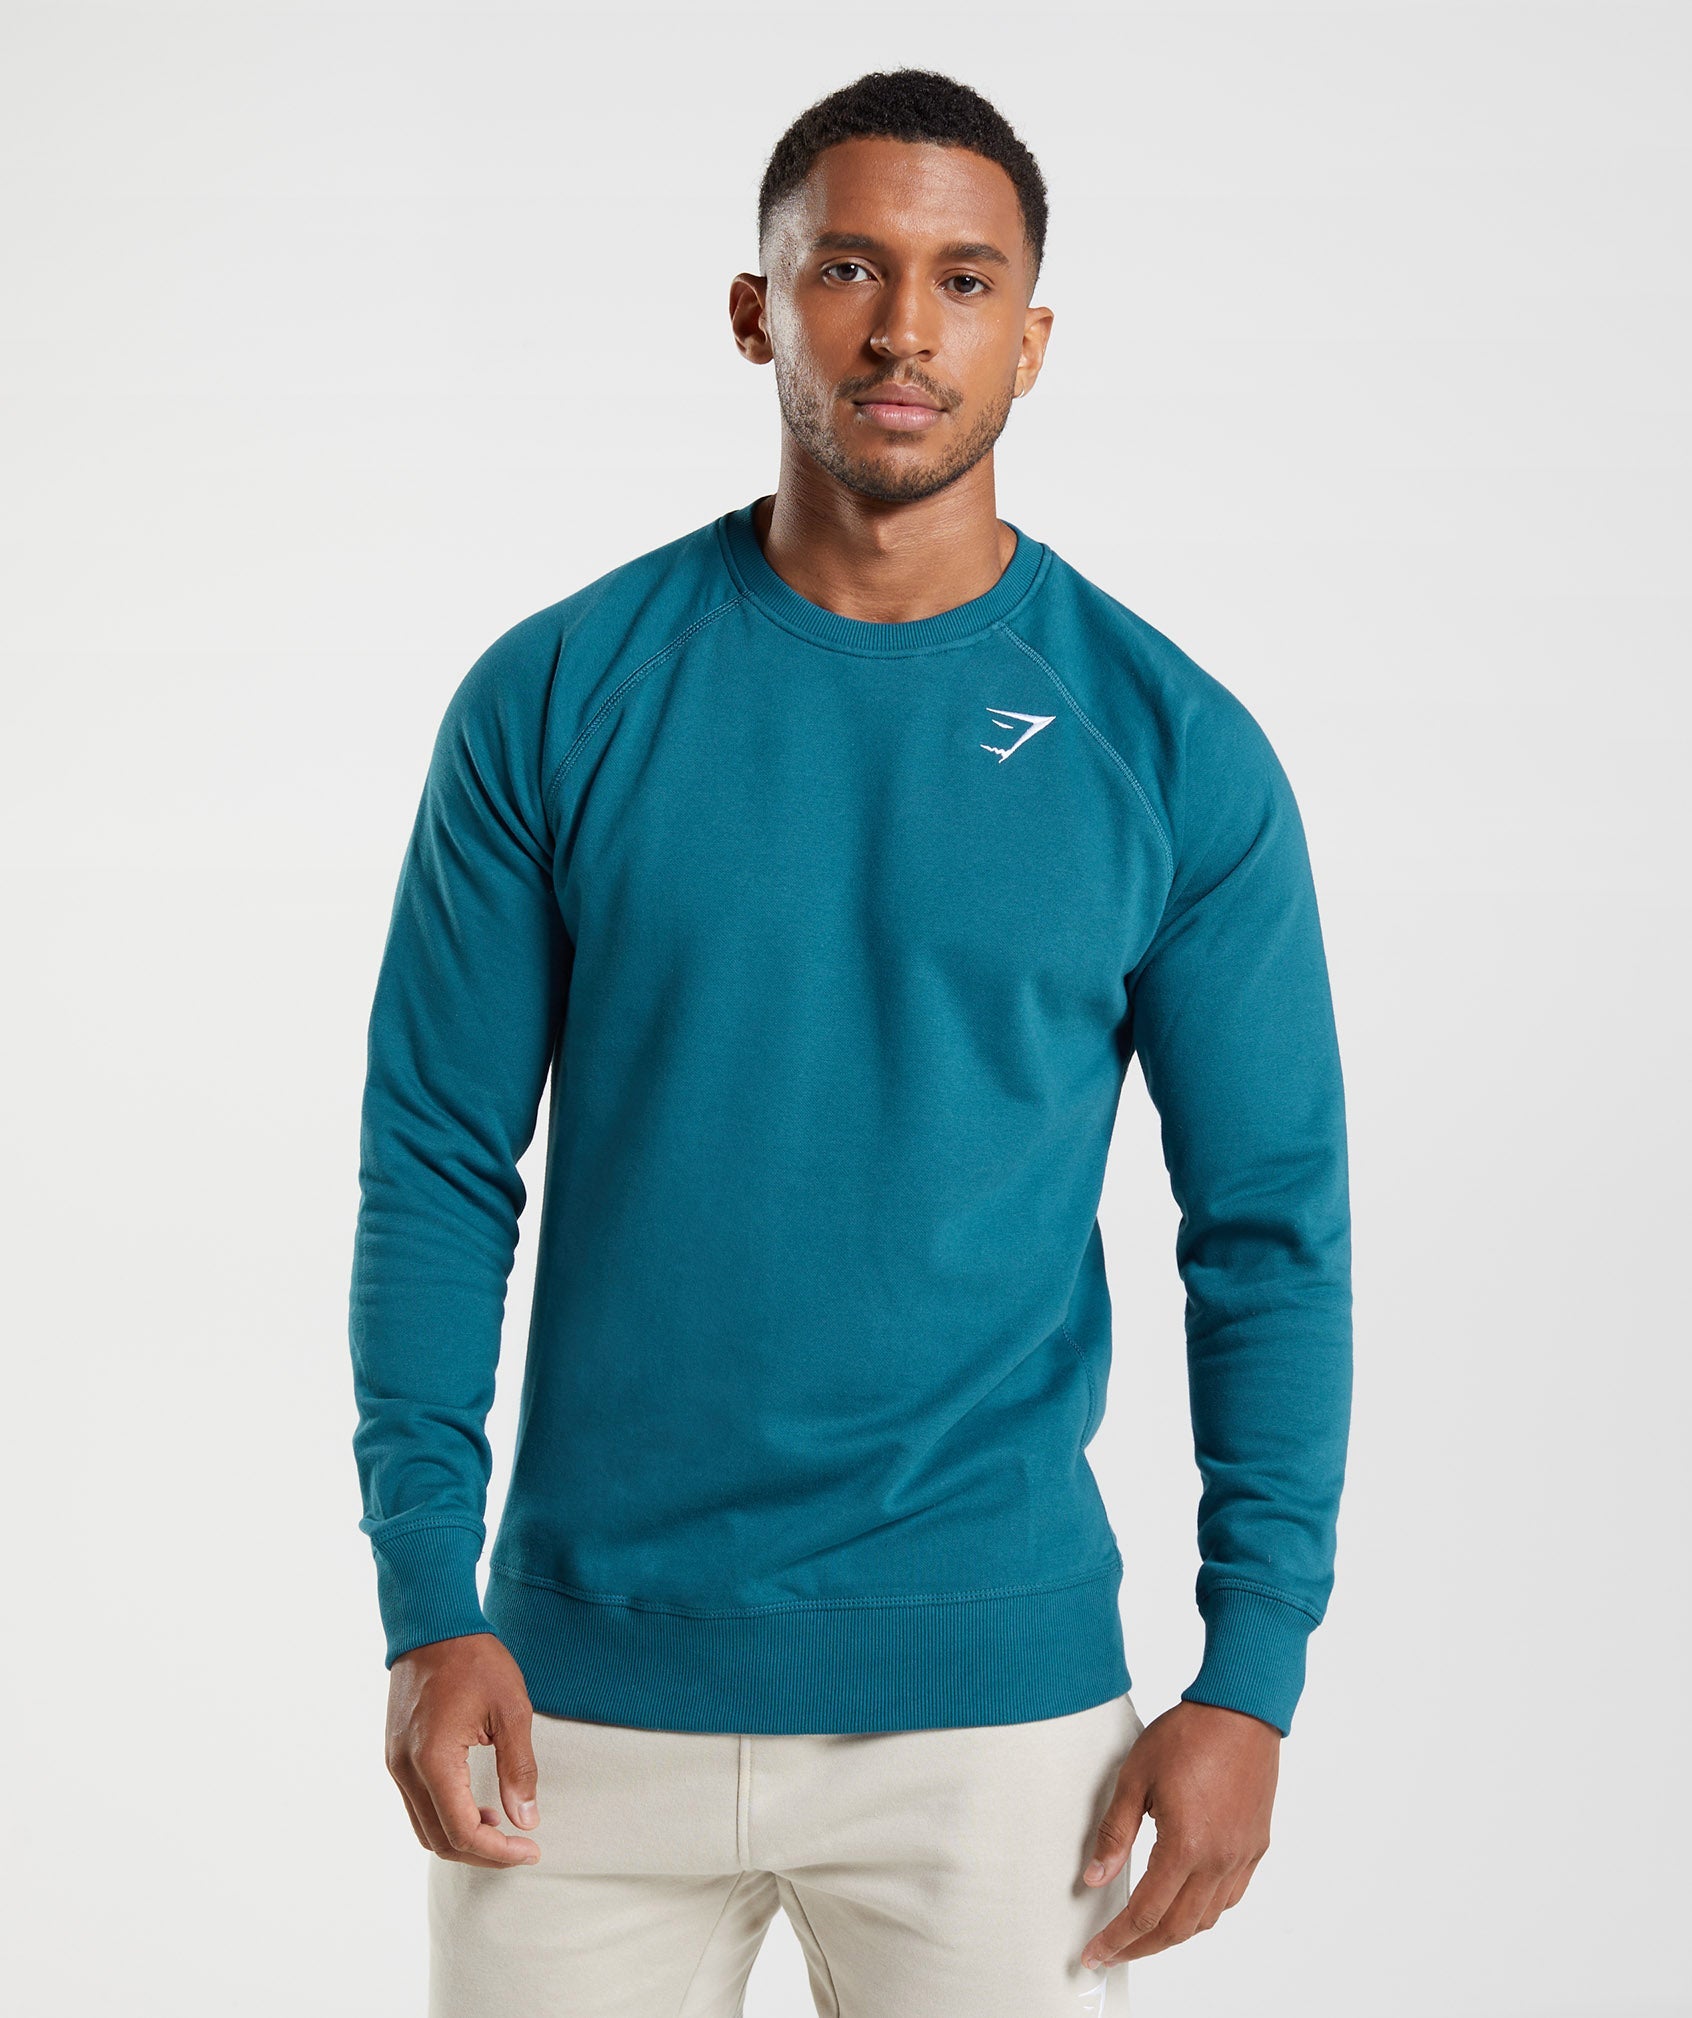 Gymshark Crest Sweatshirt - Atlantic Blue